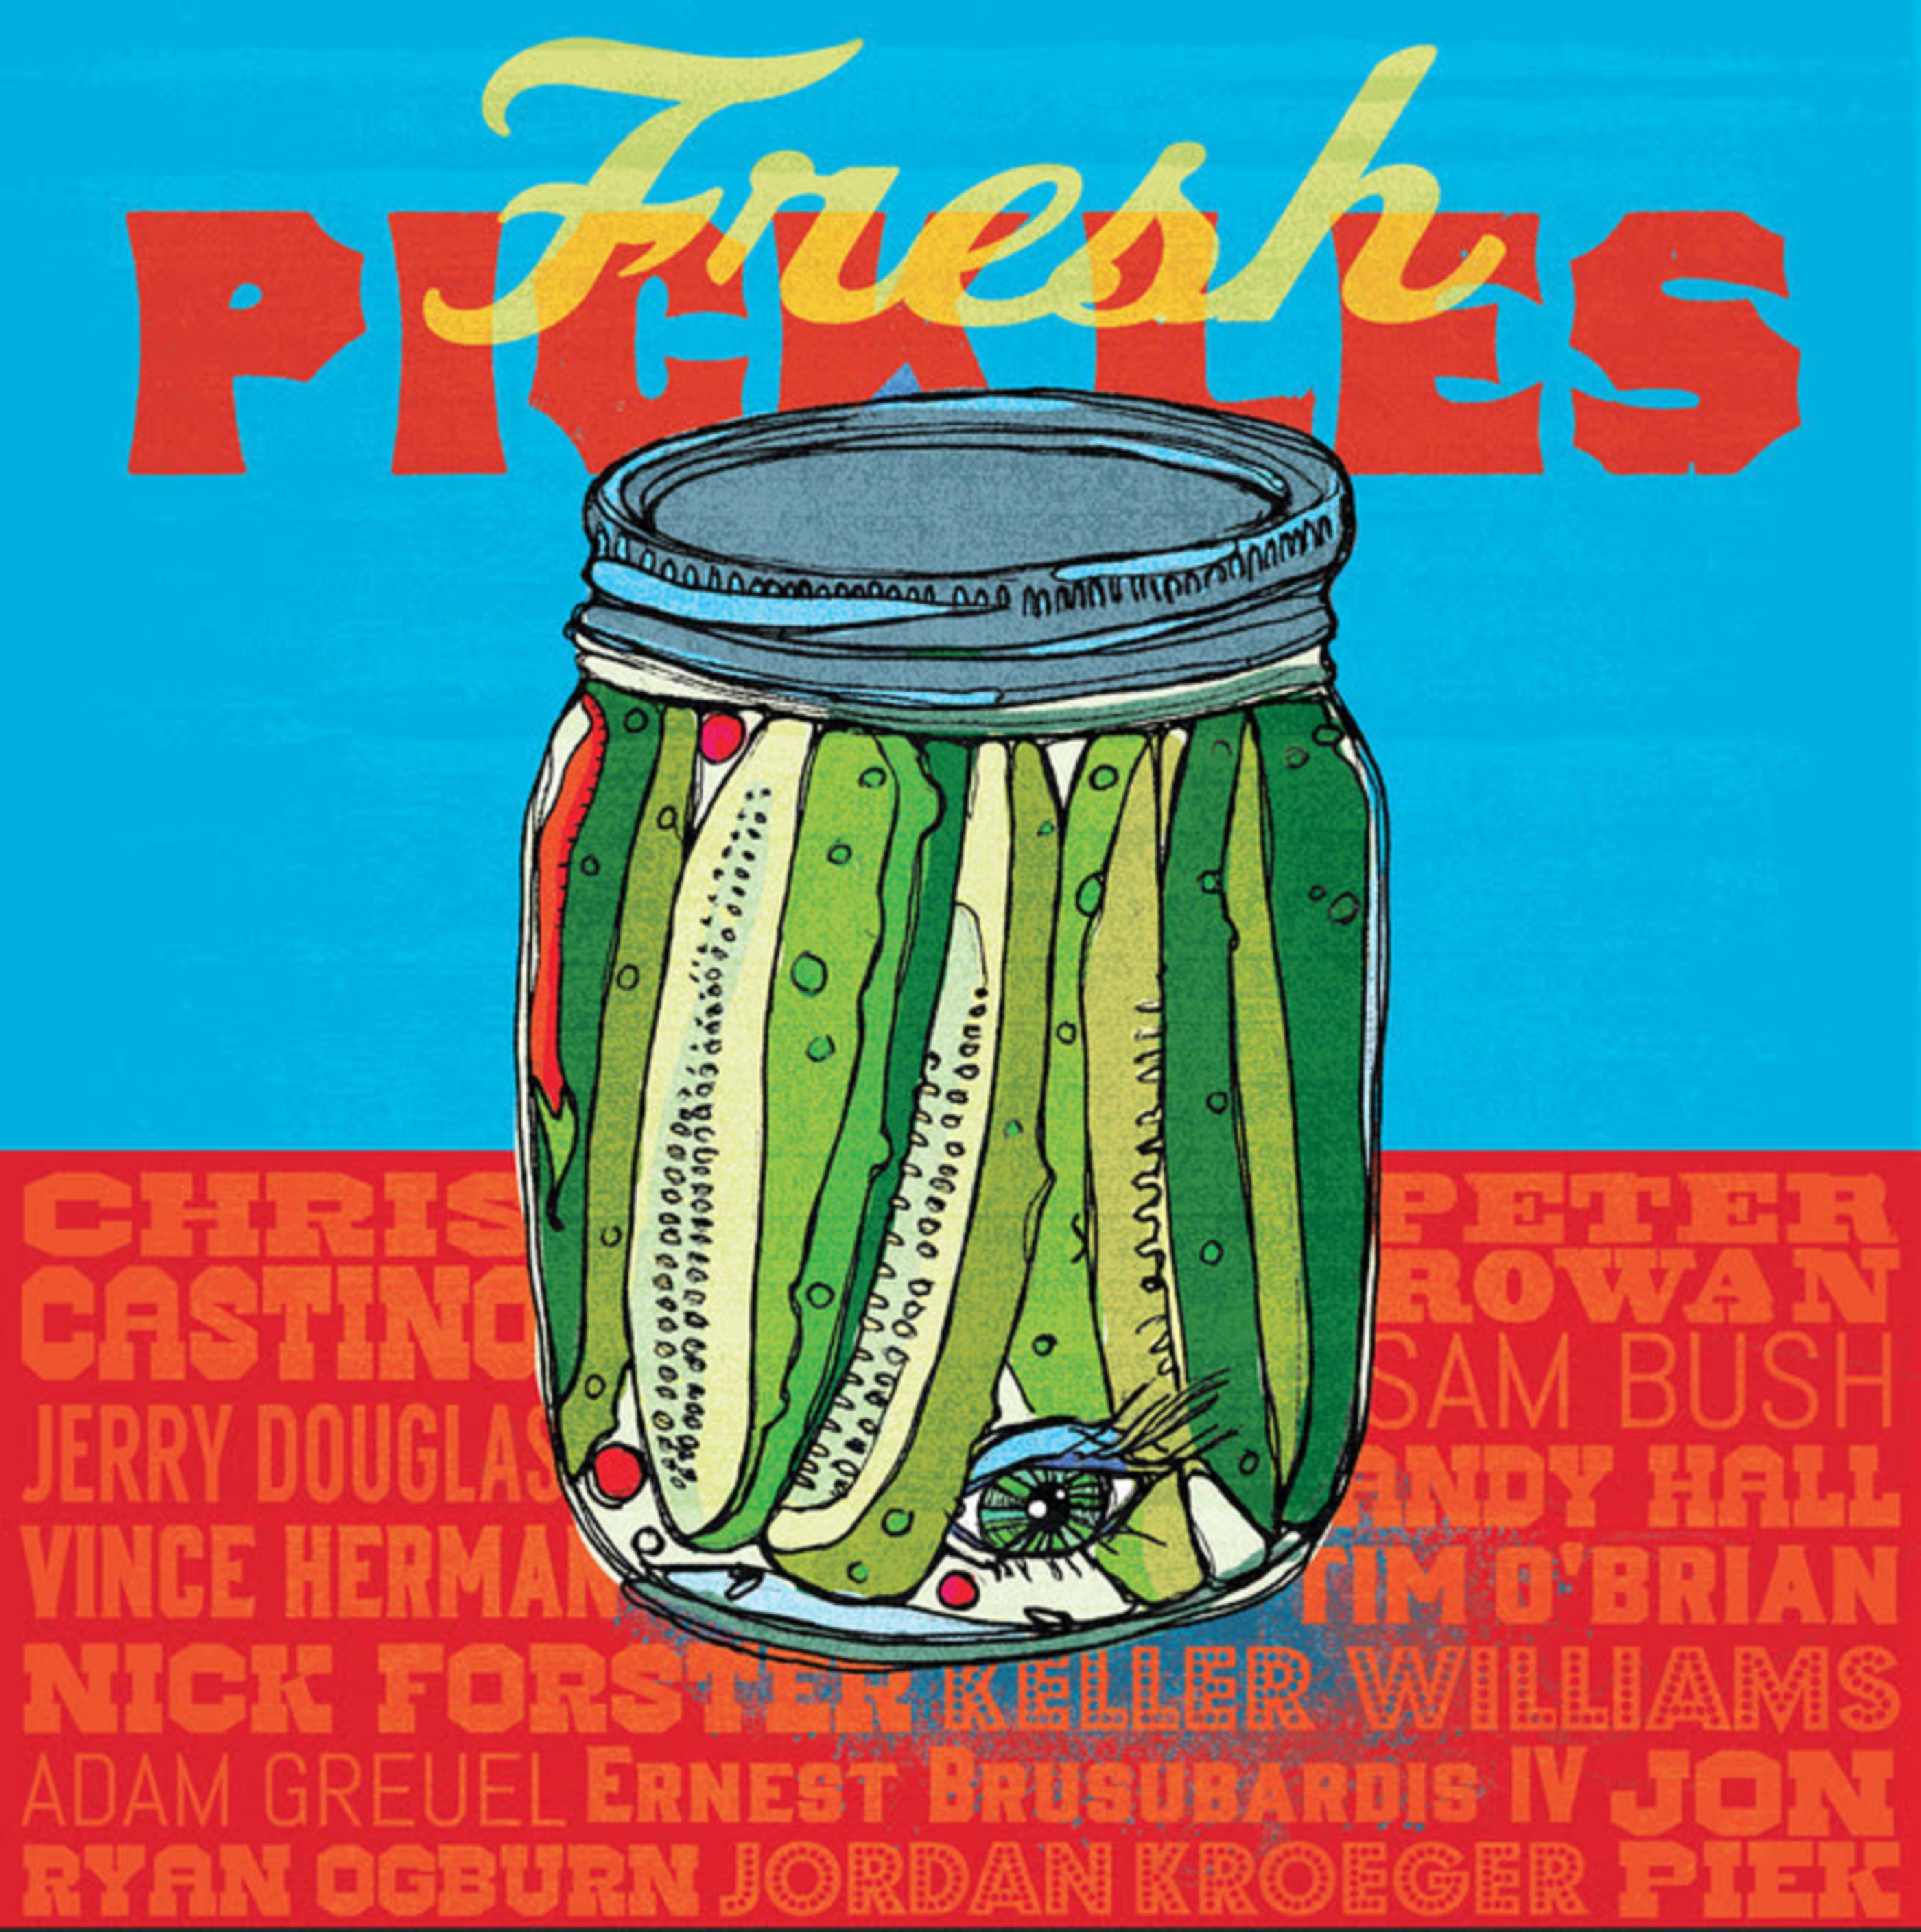 Chris Castino & Chicken Wire Empire Release ‘Fresh Pickles’ w/ Sam Bush, Keller Williams, Peter Rowan